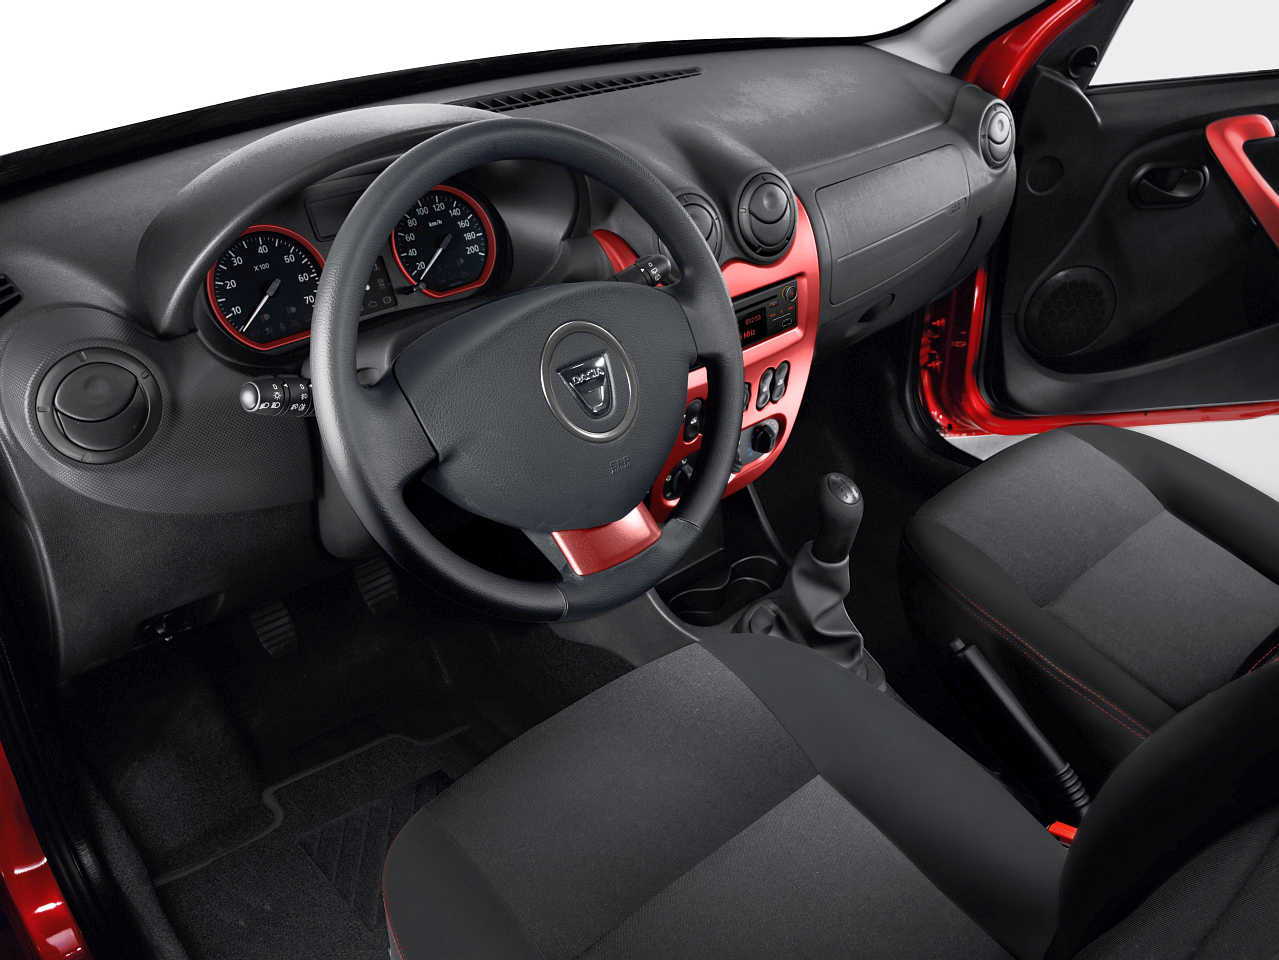 Dacia Lodgy (2012): Preis & Motoren